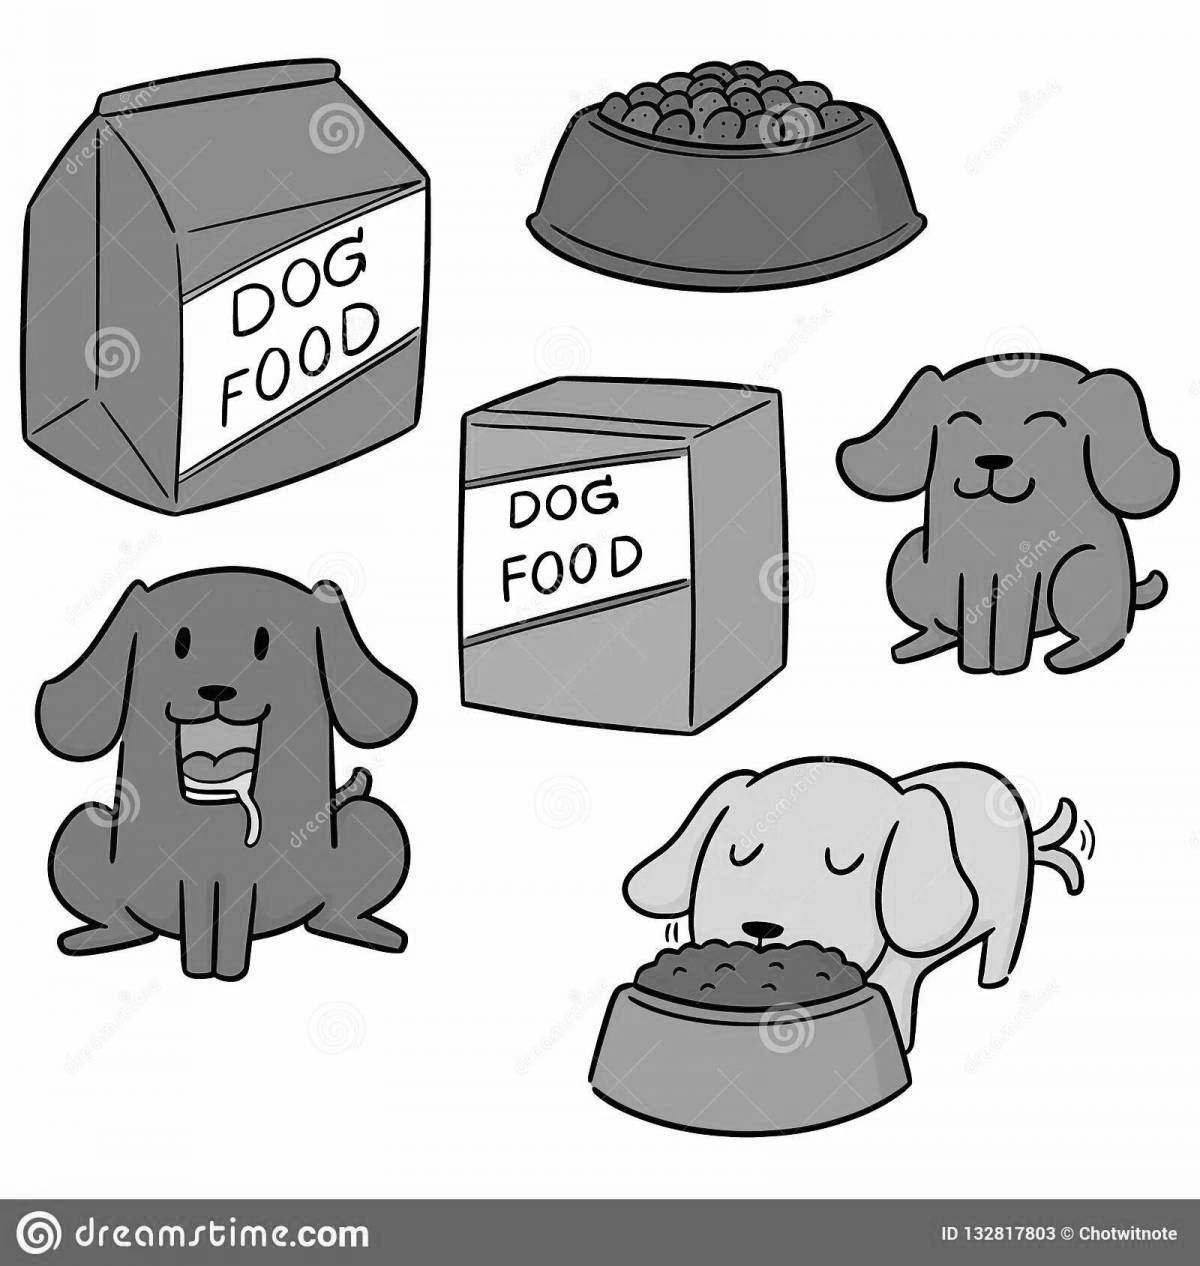 Fun dog food coloring sheet